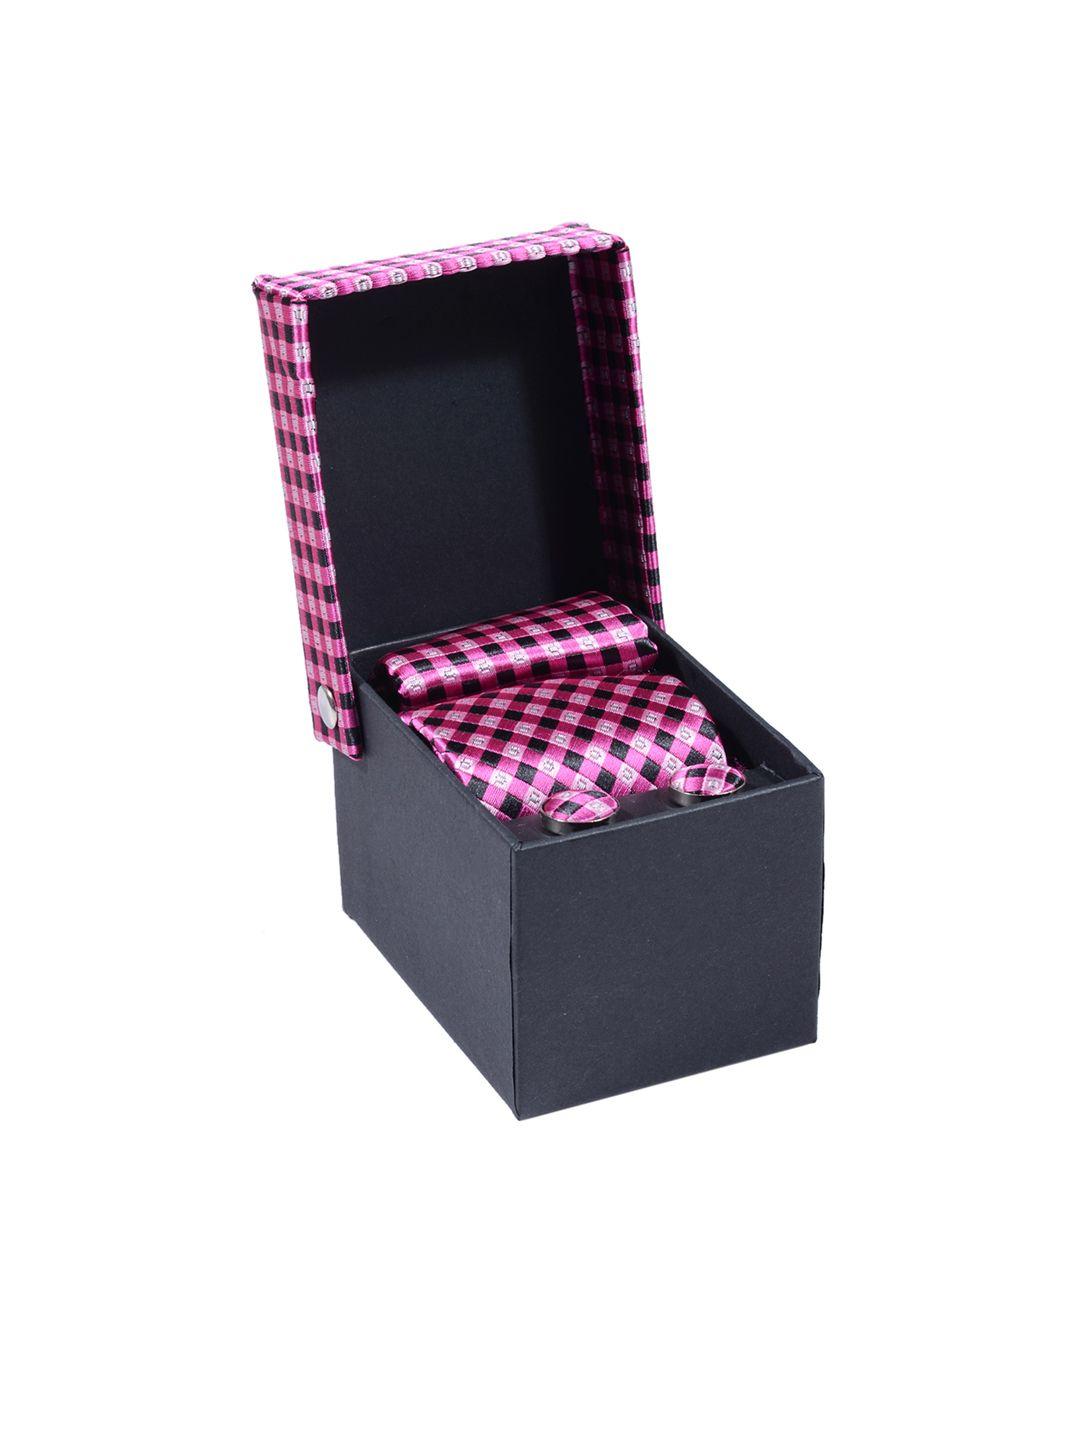 tossido men pink & black accessory gift set